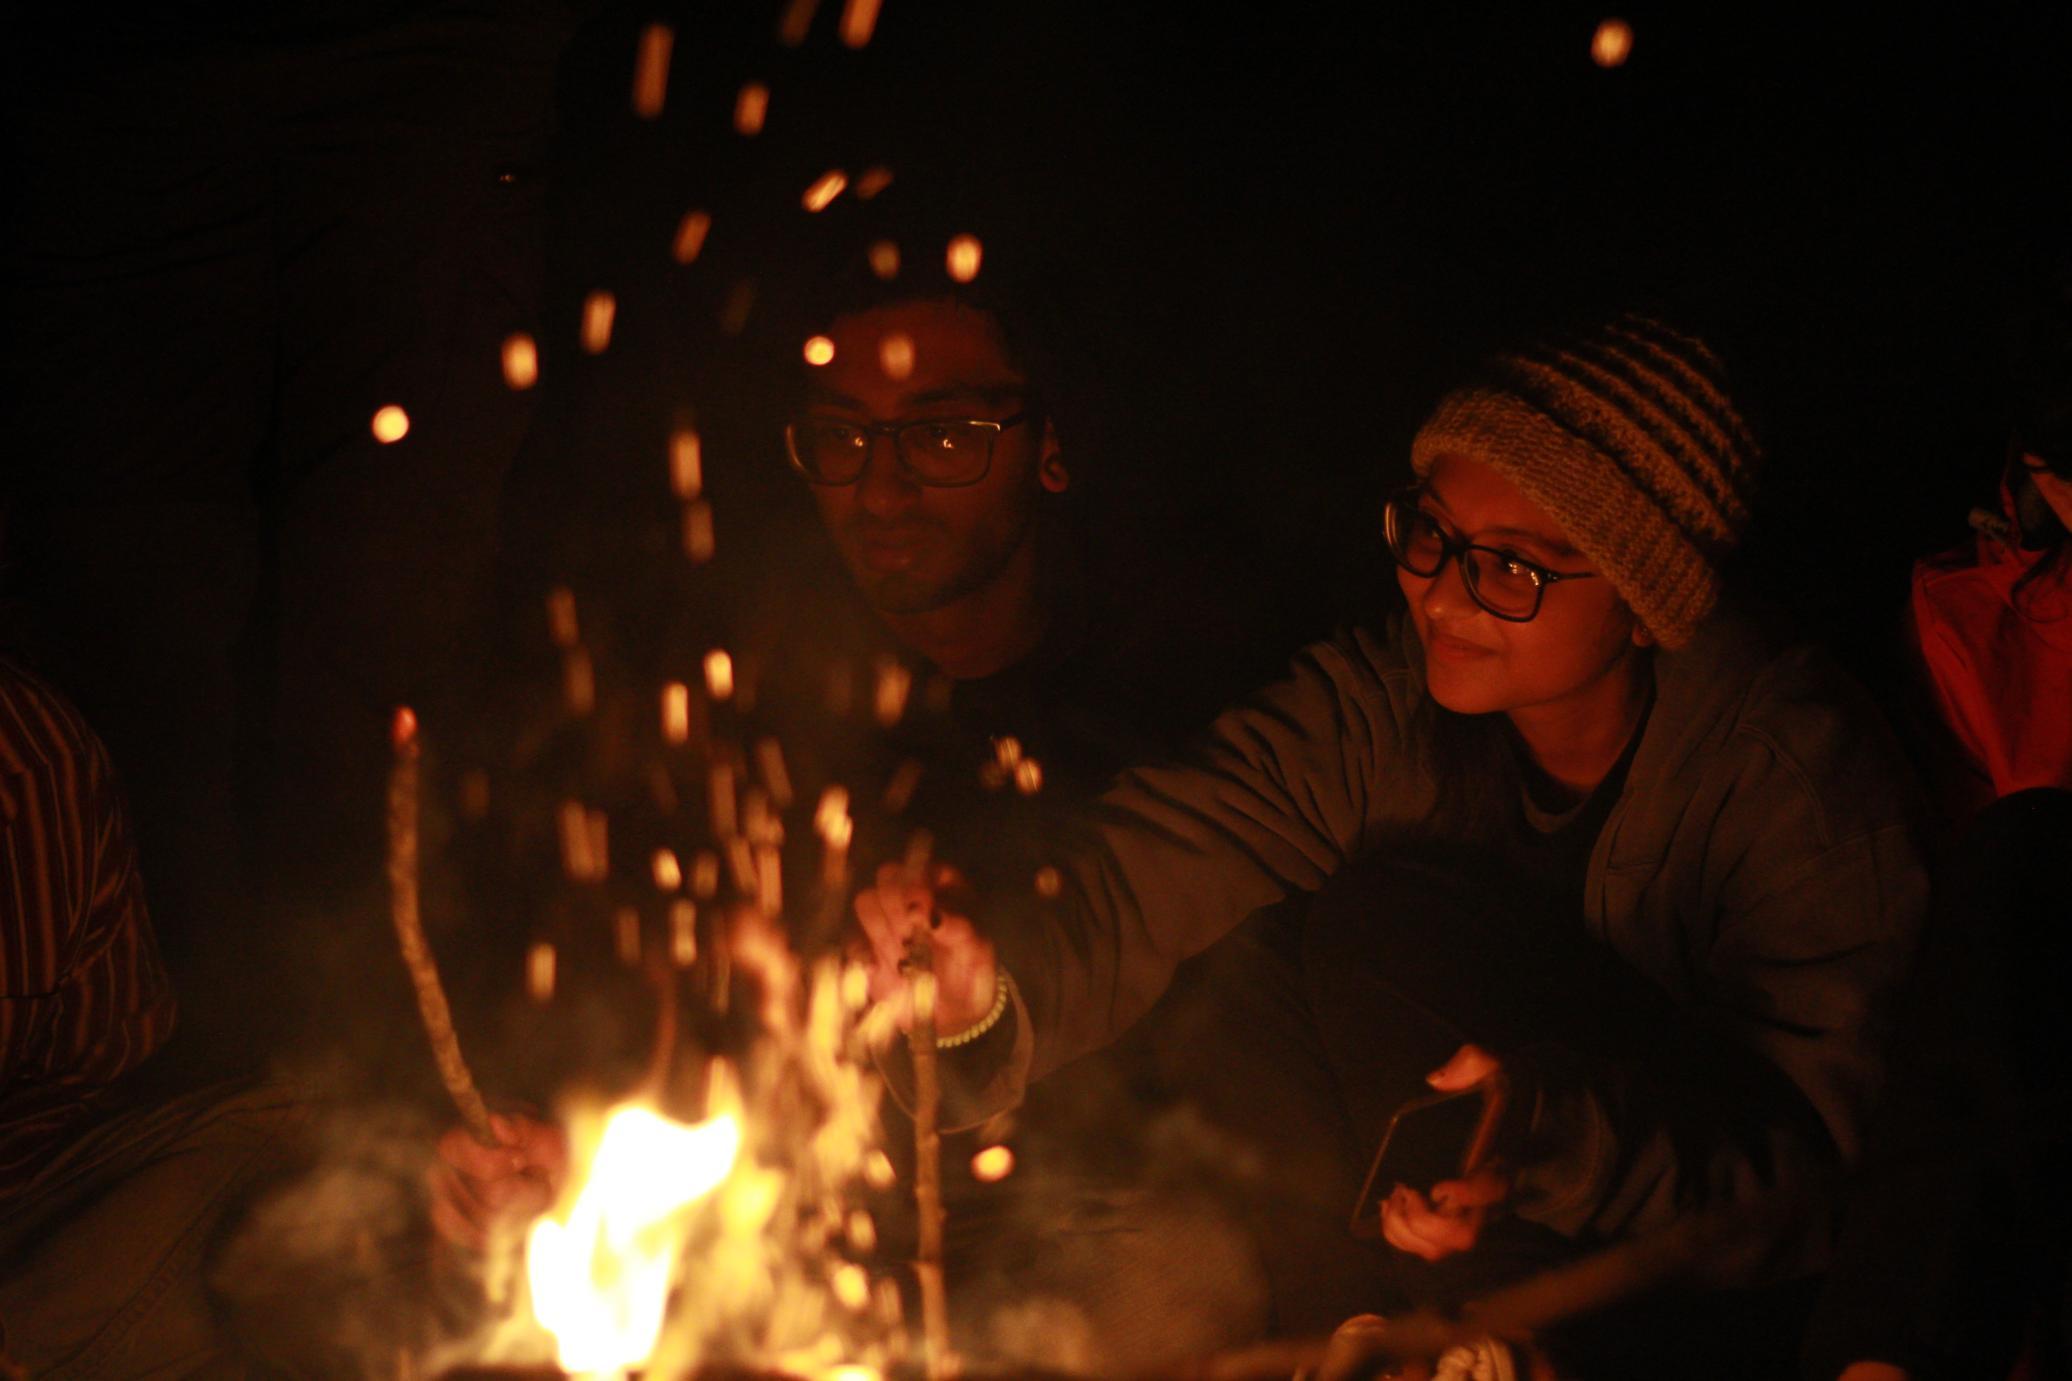 Sudan and Siddhi enjoying the Sapelo bonfire